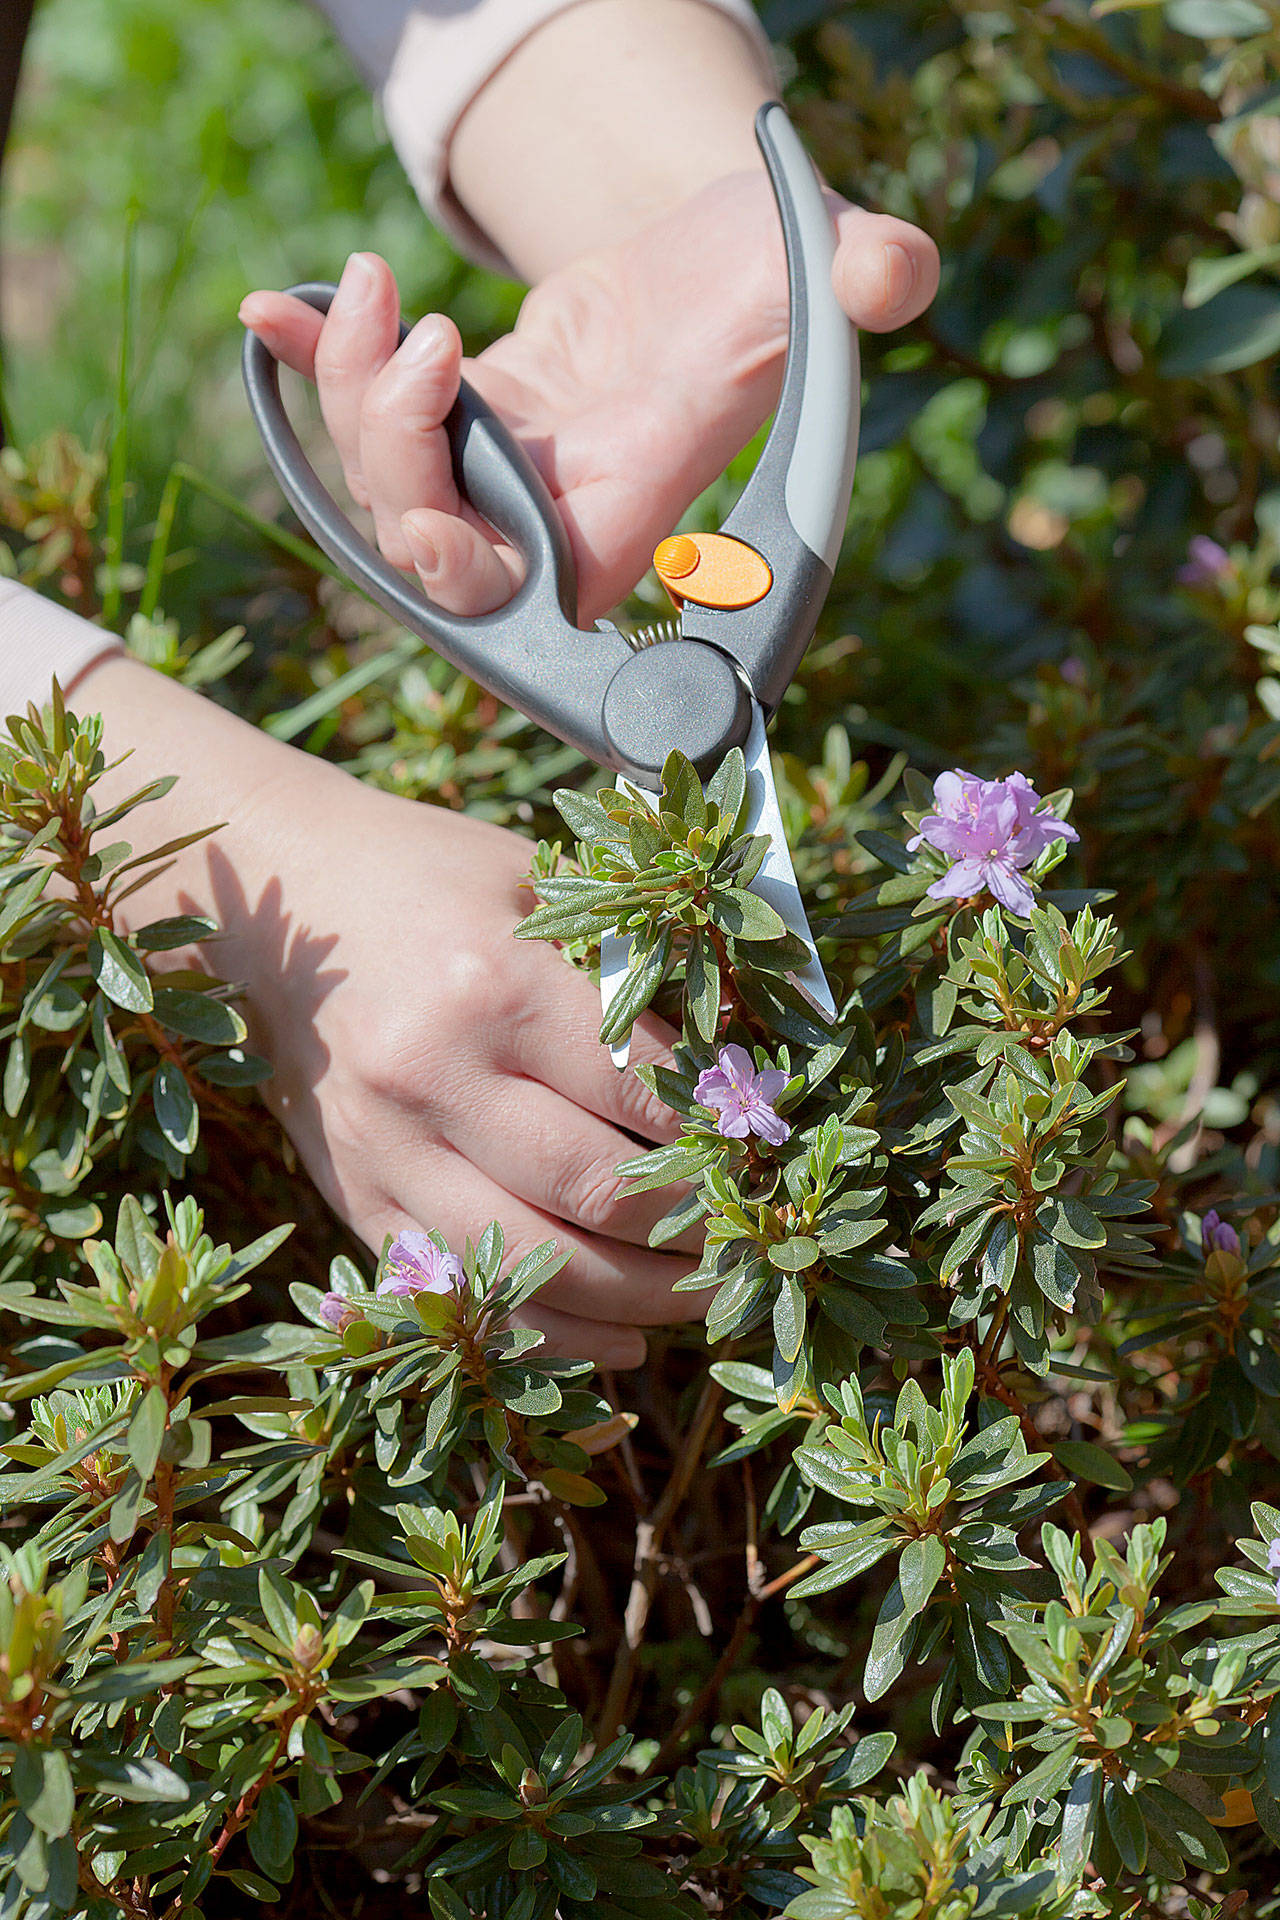 The Evergreen Arboretum & Gardens is hosting a “Summer Pruning” webinar July 14 via Zoom. (Getty Images)